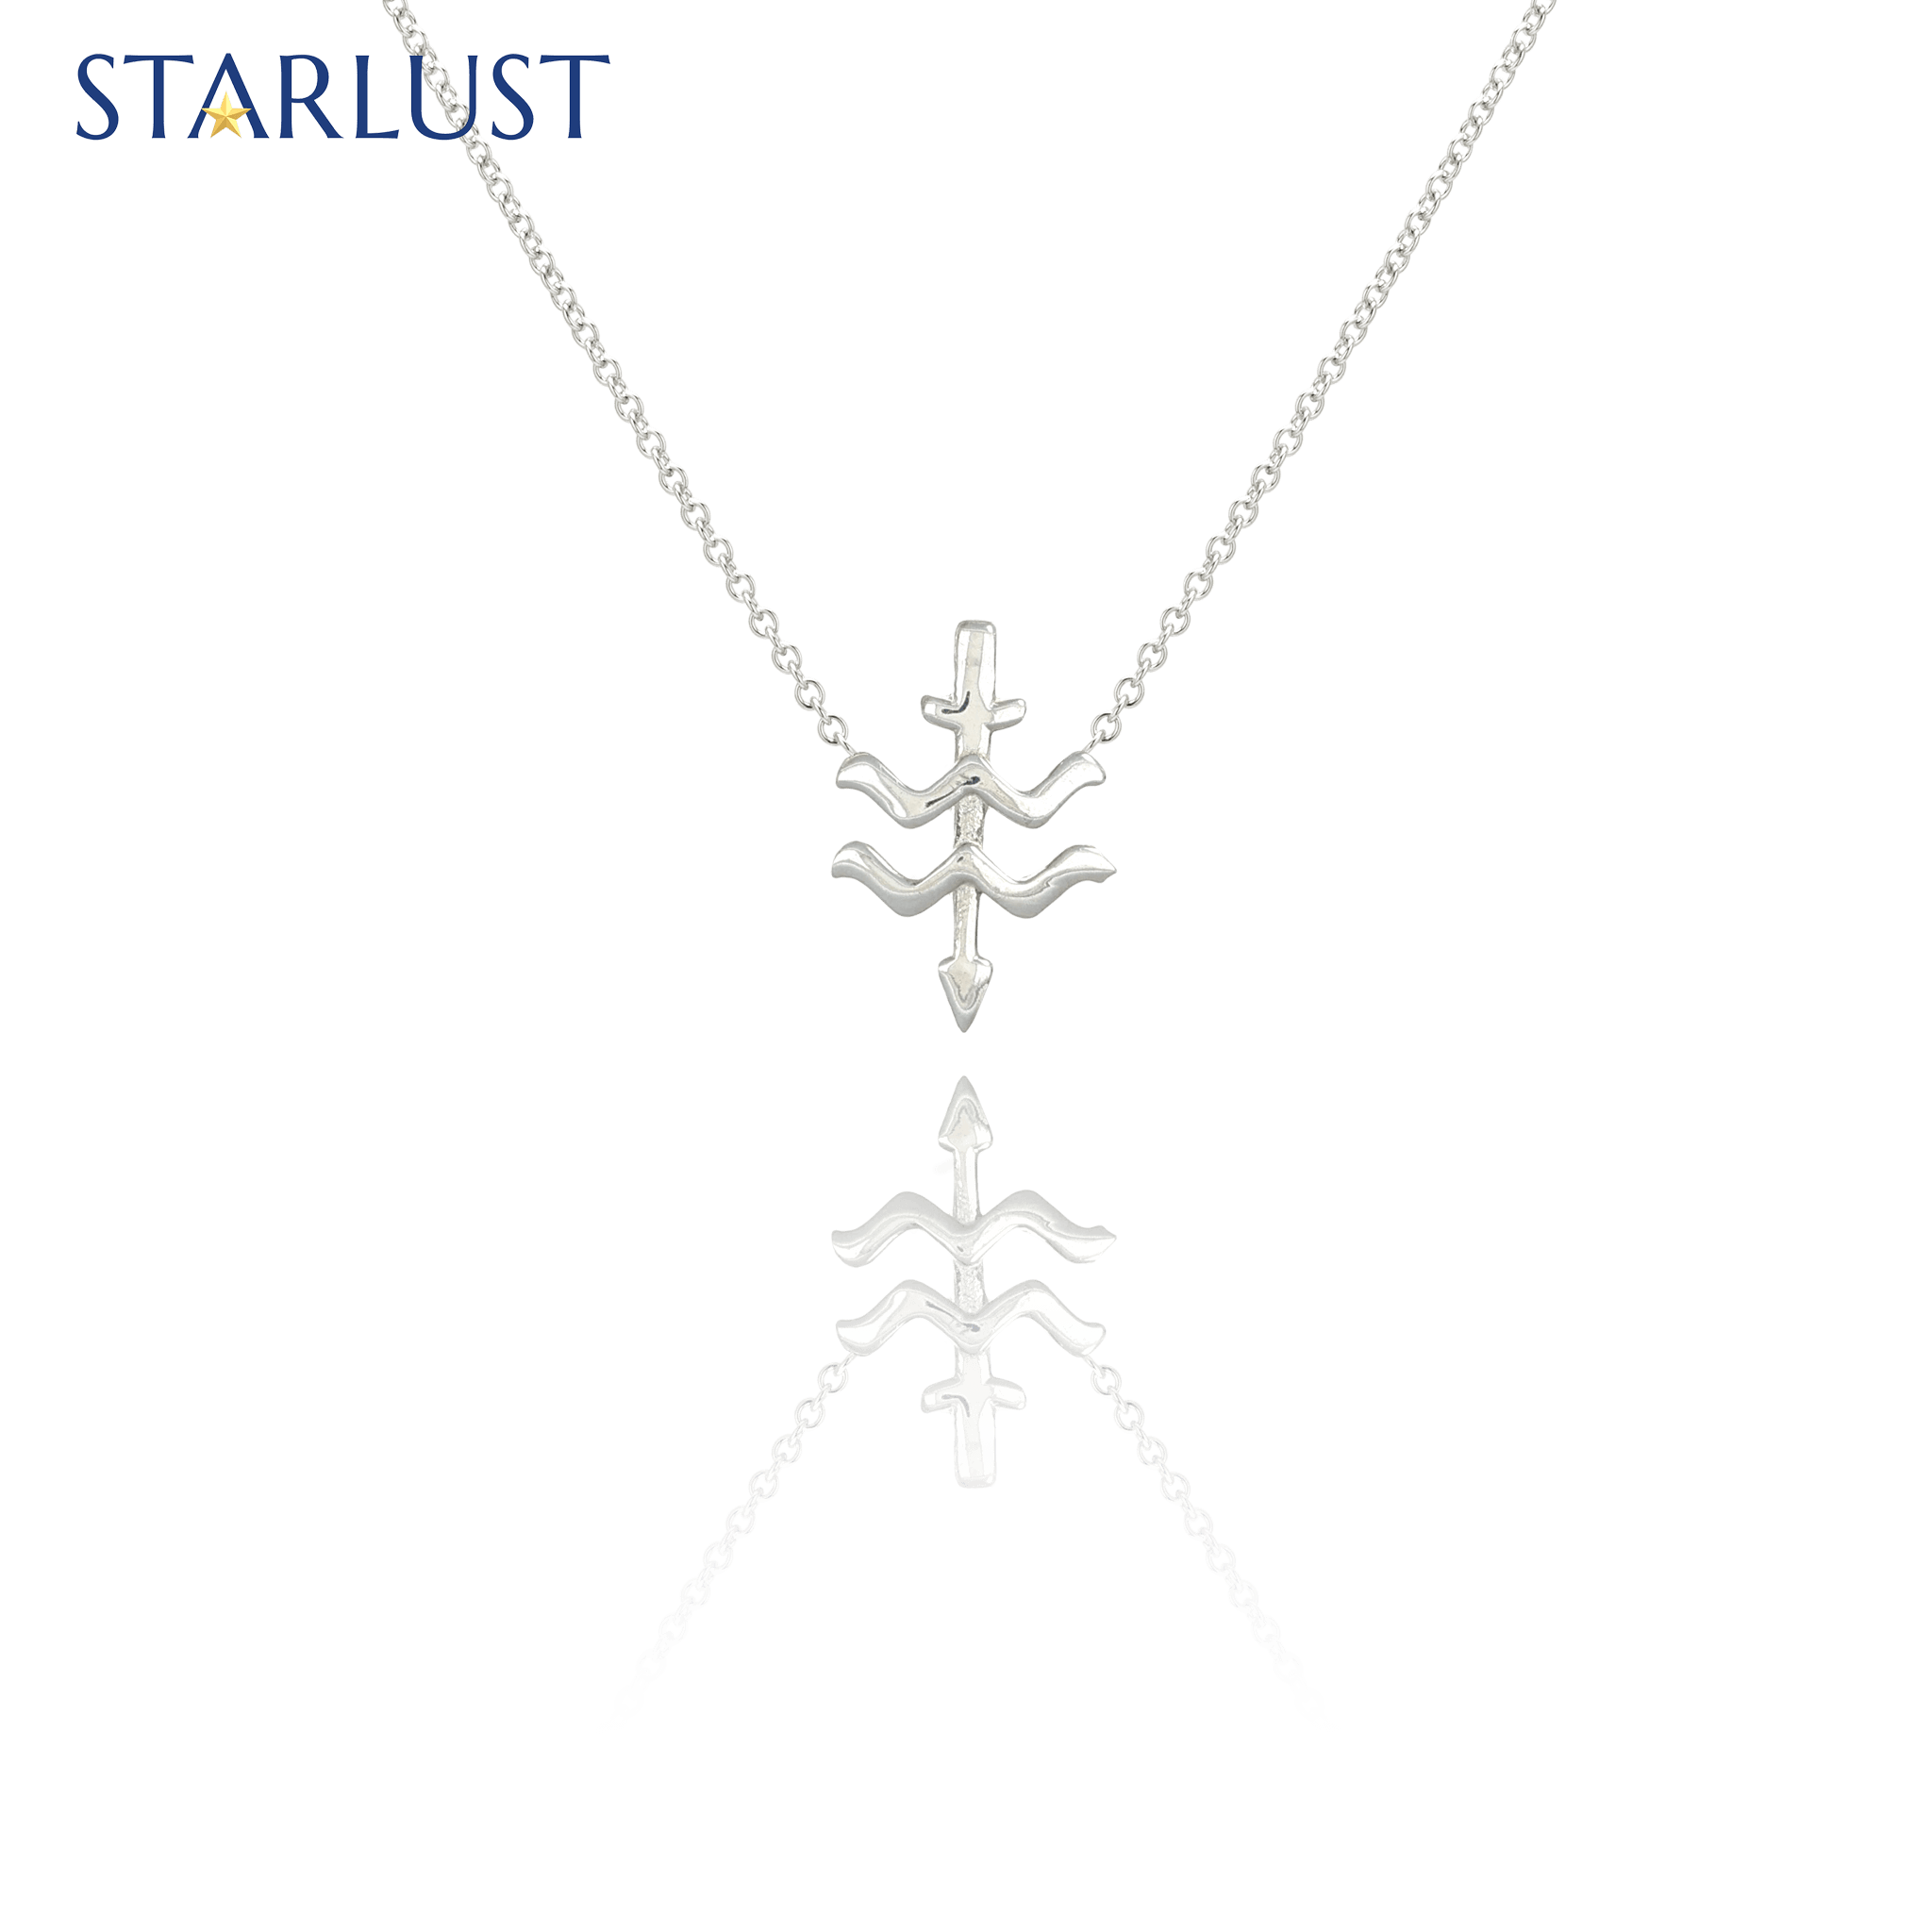 Aquarius and Sagittarius Necklace Sterling Silver Starlust